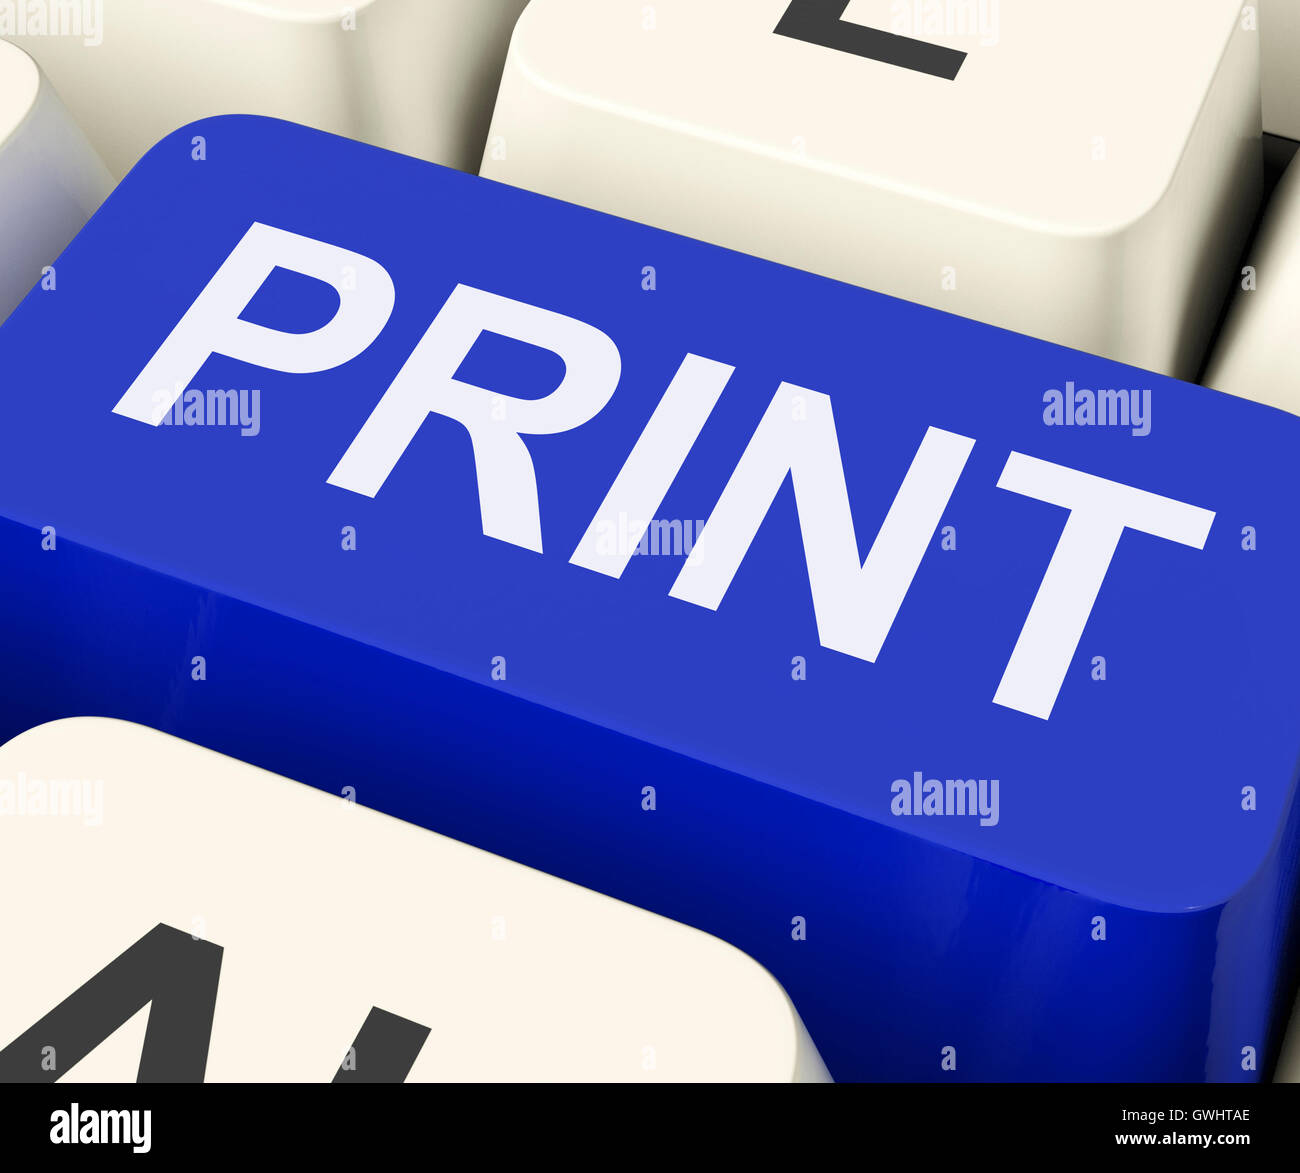 Print Key Shows Printer Printing Or Printout Stock Photo